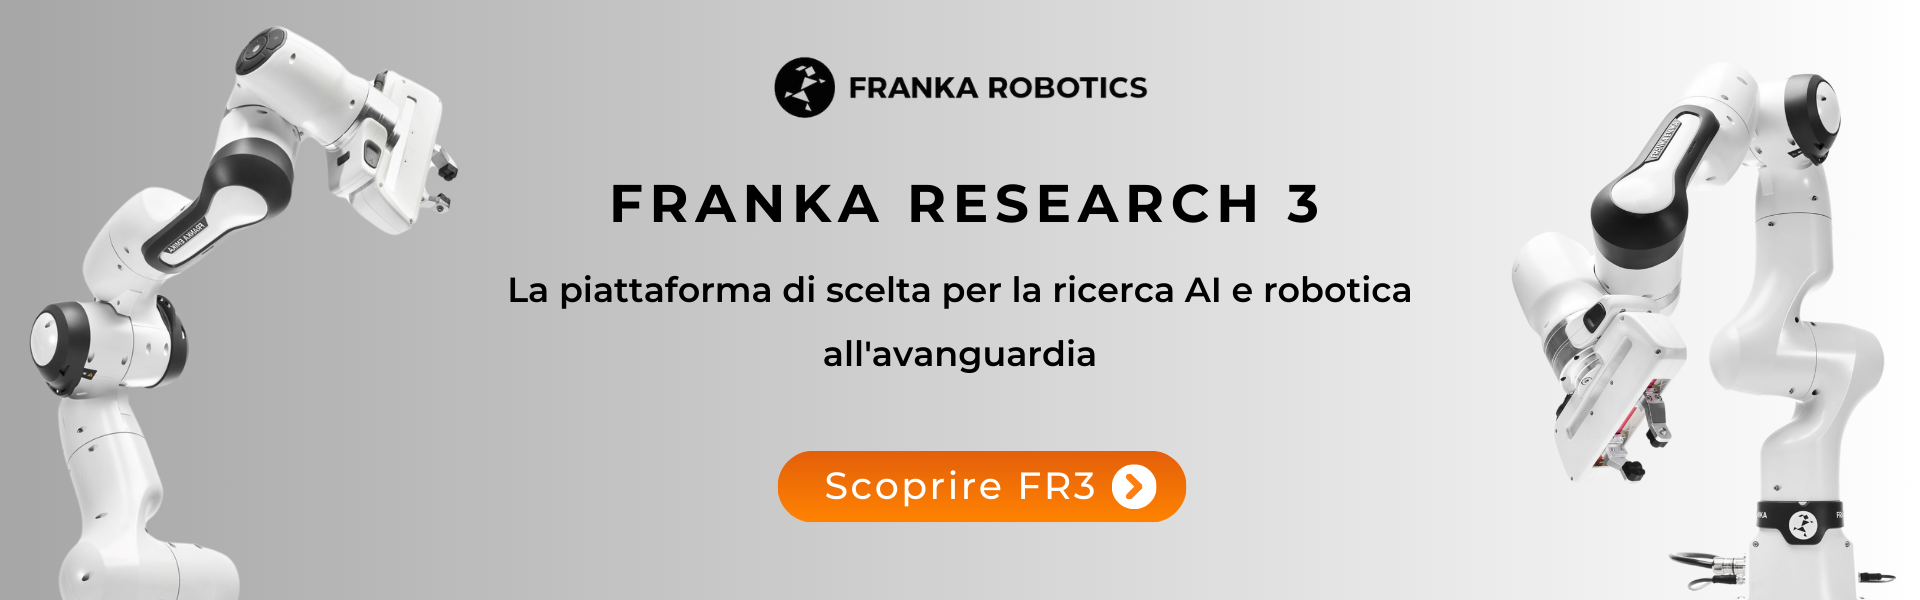 Franka Research 3 banner